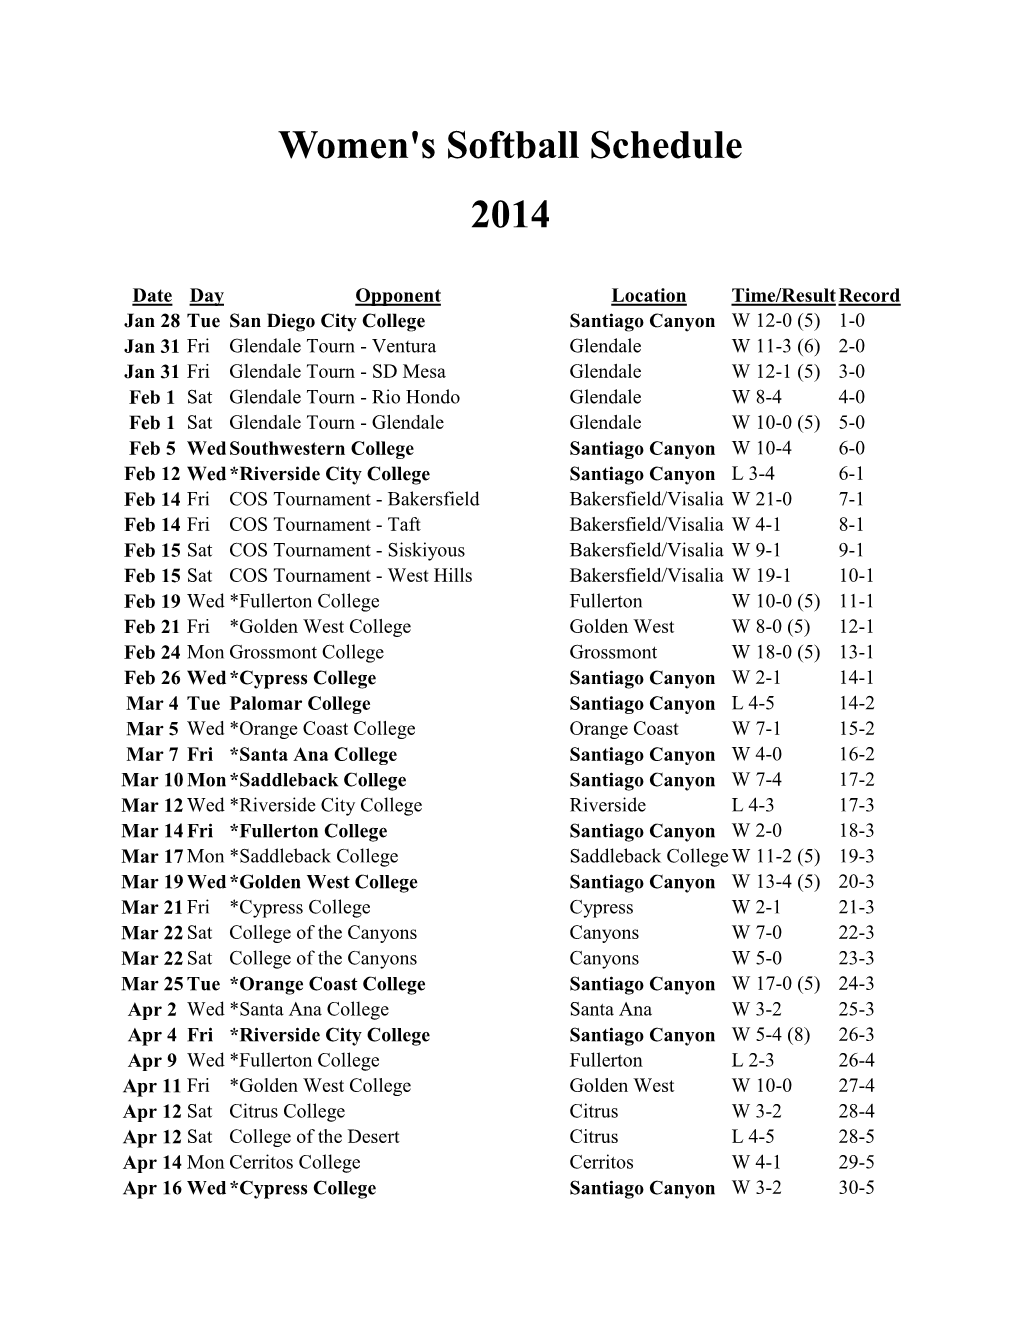 Women's Softball Schedule 2014